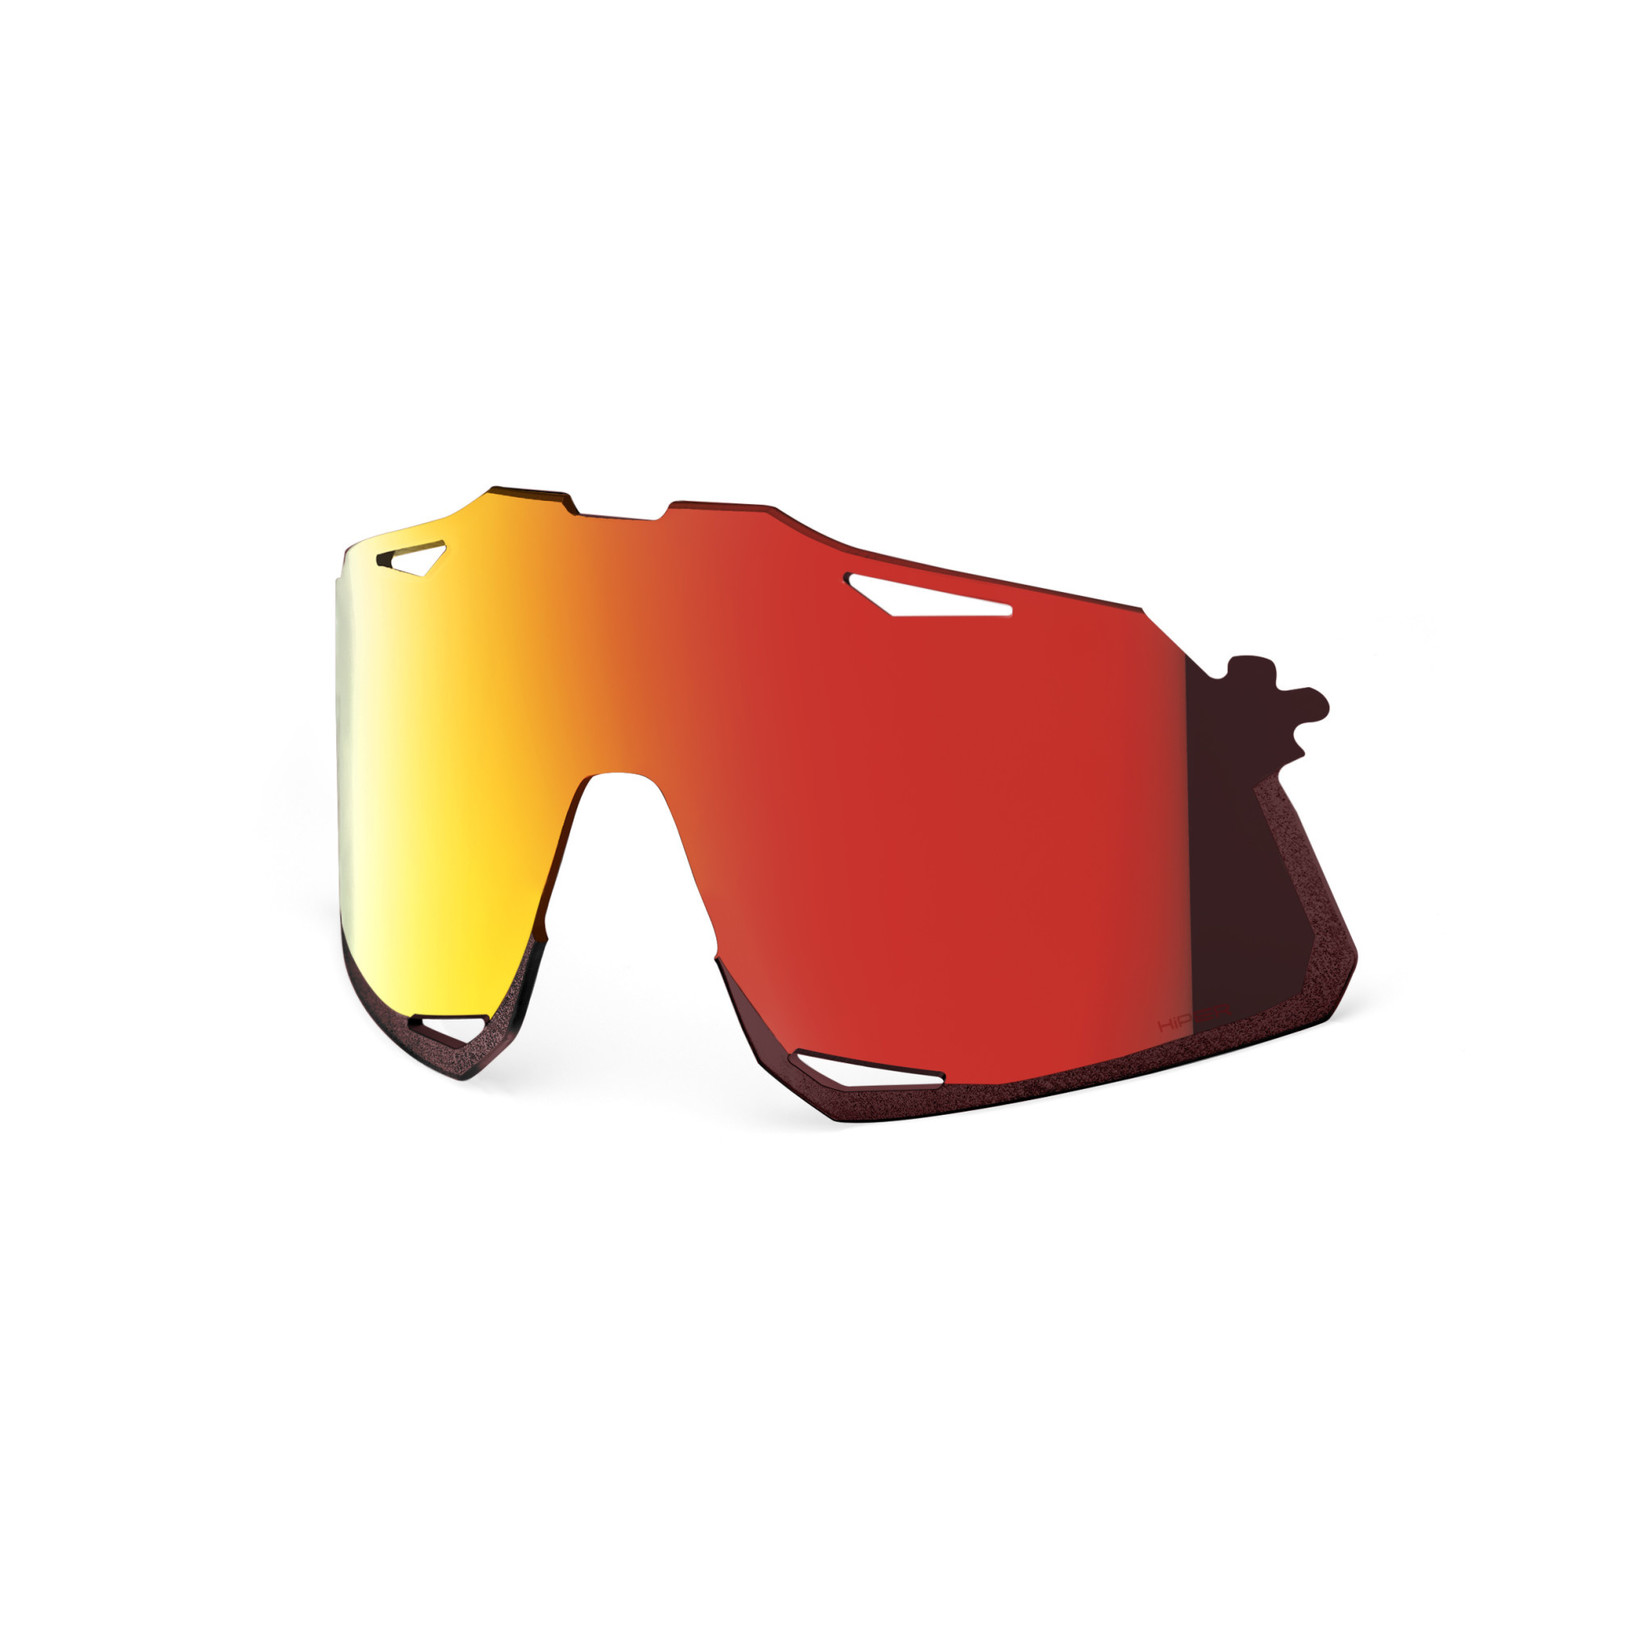 100 Percent 100% Hypercraft Bike Sunglasses Replacement Lens - Hiper Red Mirror